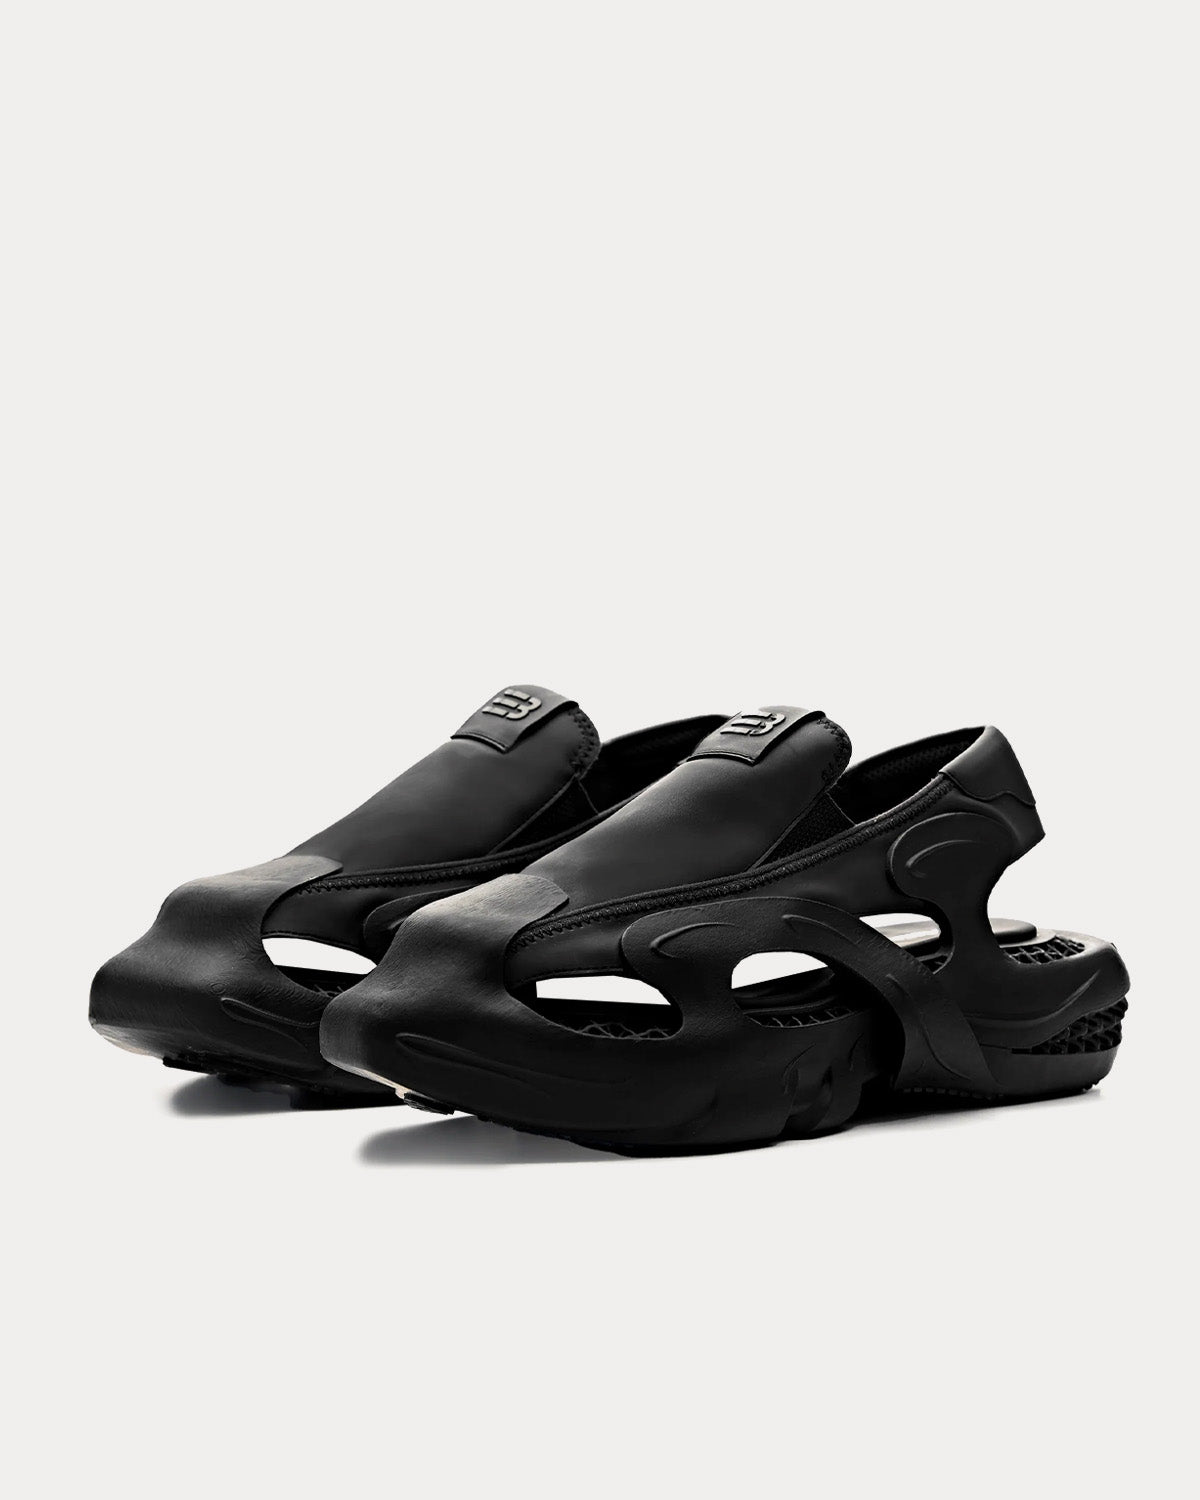 Namesake - Clippers 3000 Euphoric Black Slip On Sneakers